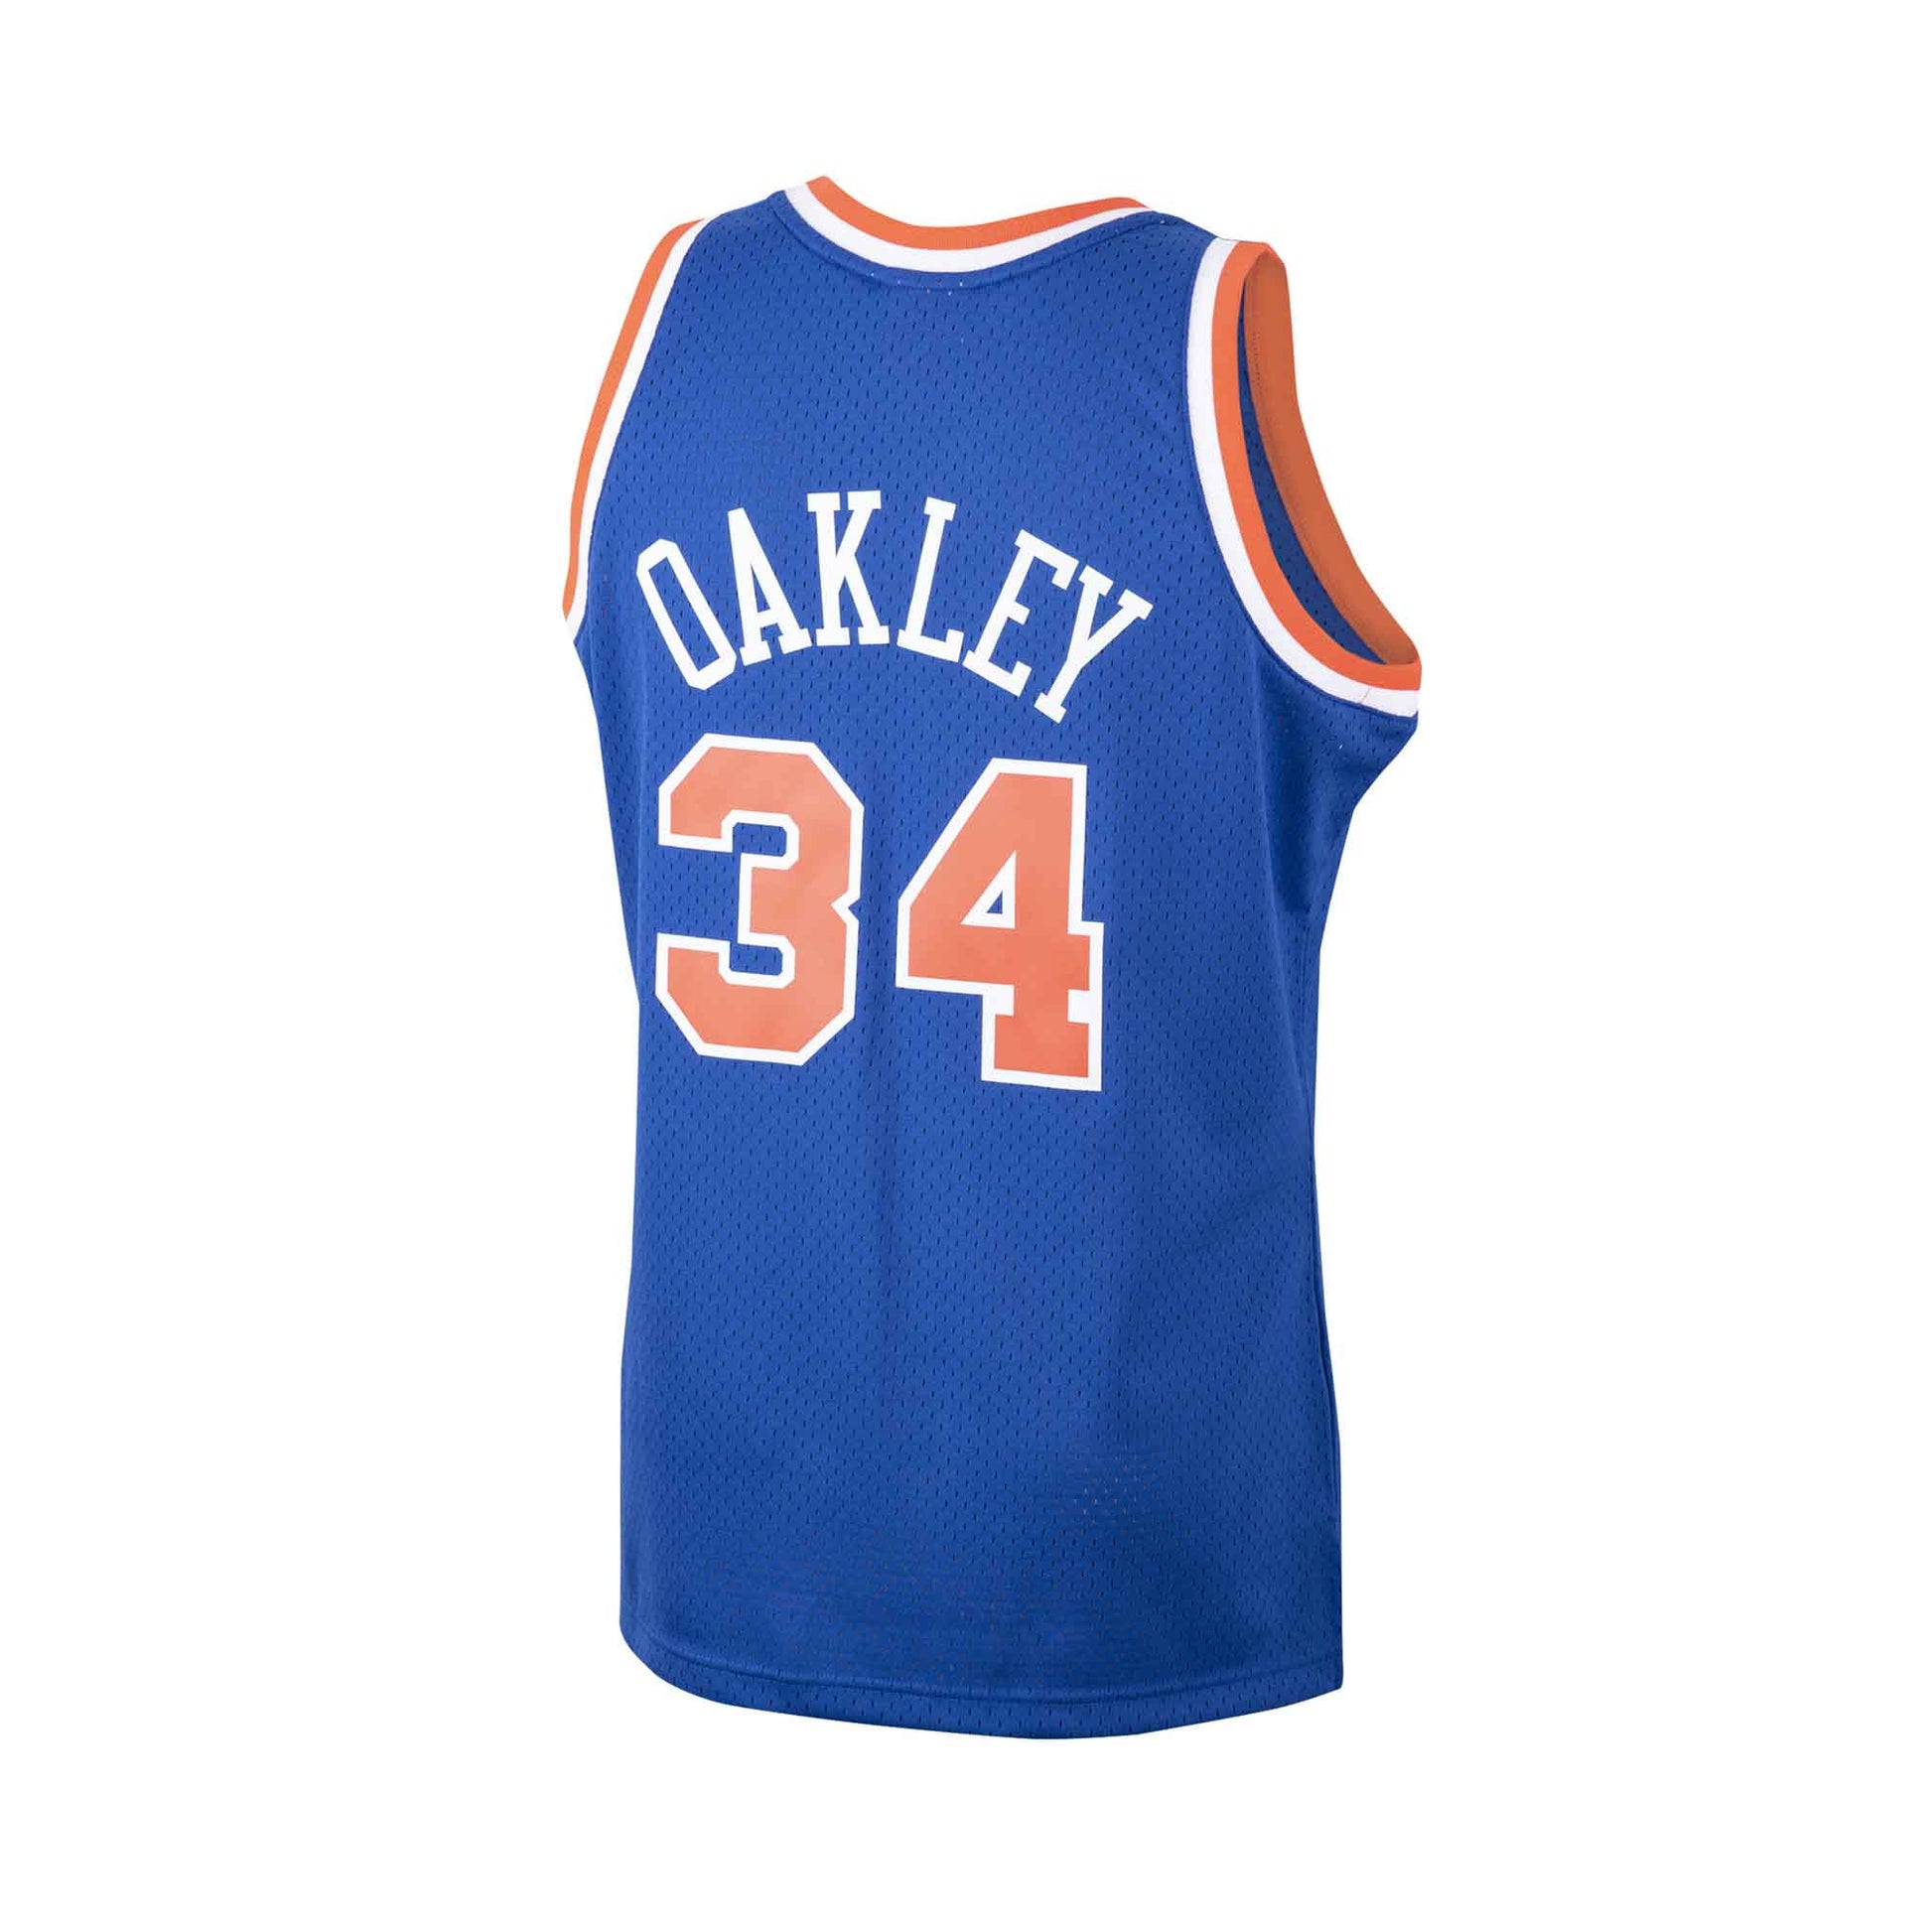 Charles Oakley 34 New York Knicks 1996-97 Mitchell & Ness Swingman Jersey